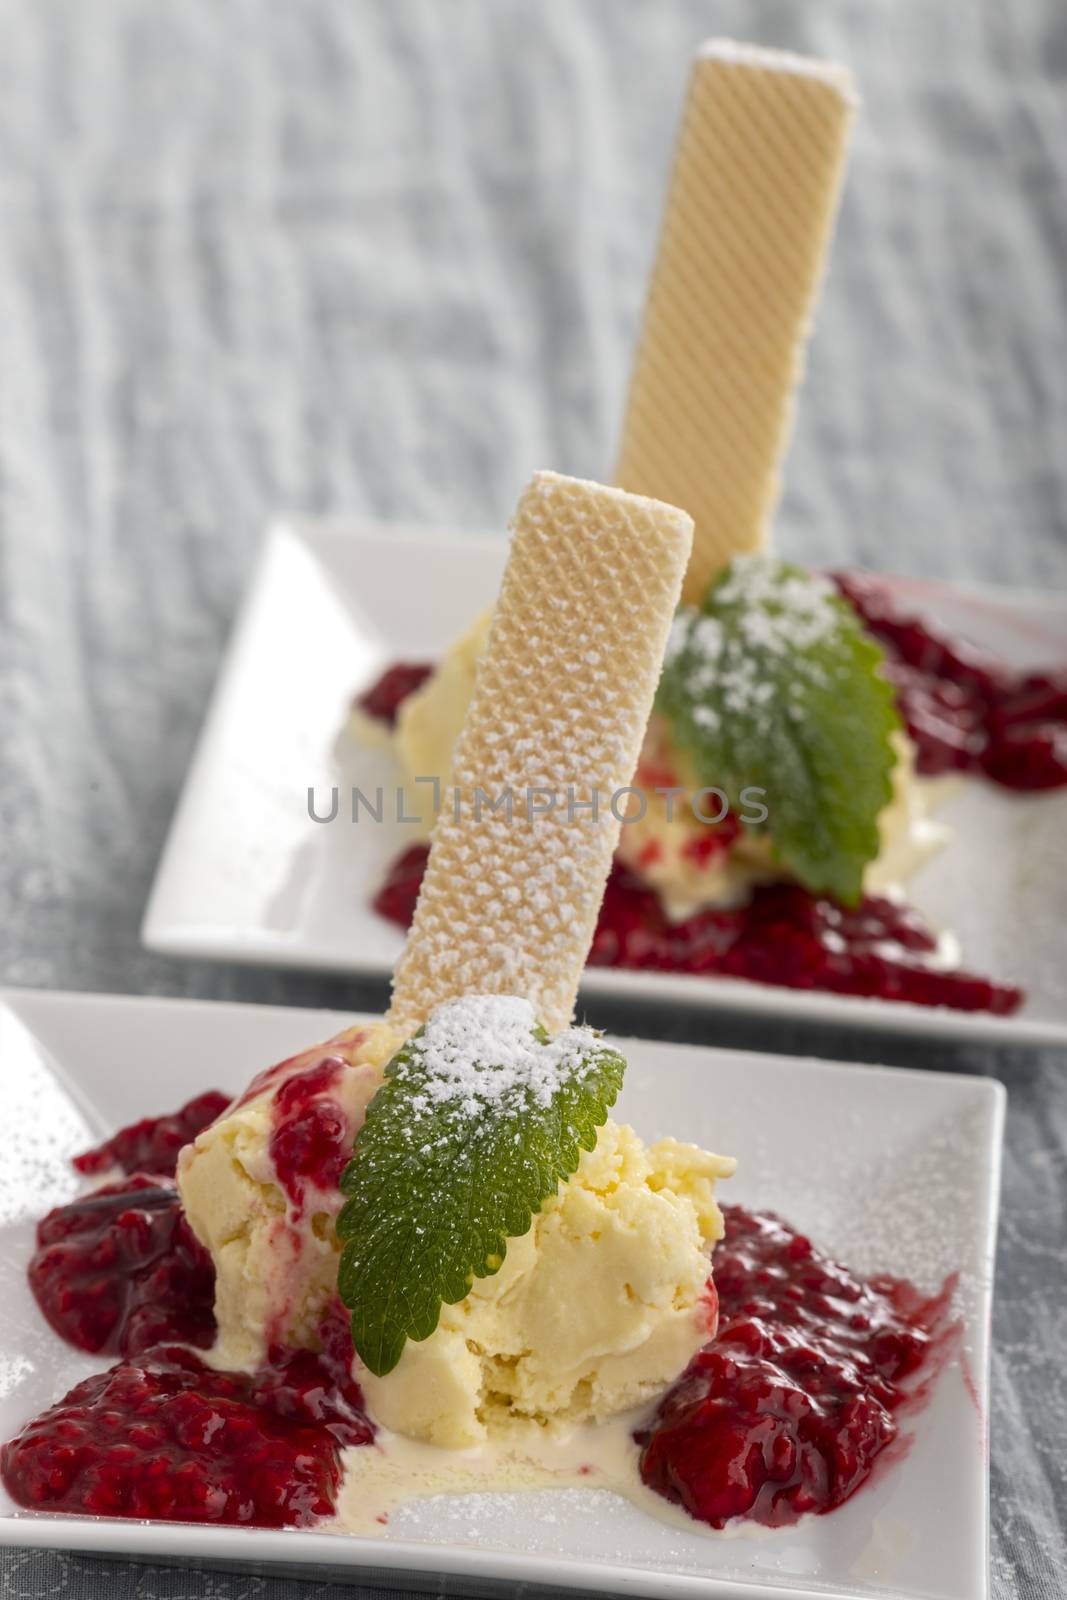 ice cream with hot raspberries by bernjuer